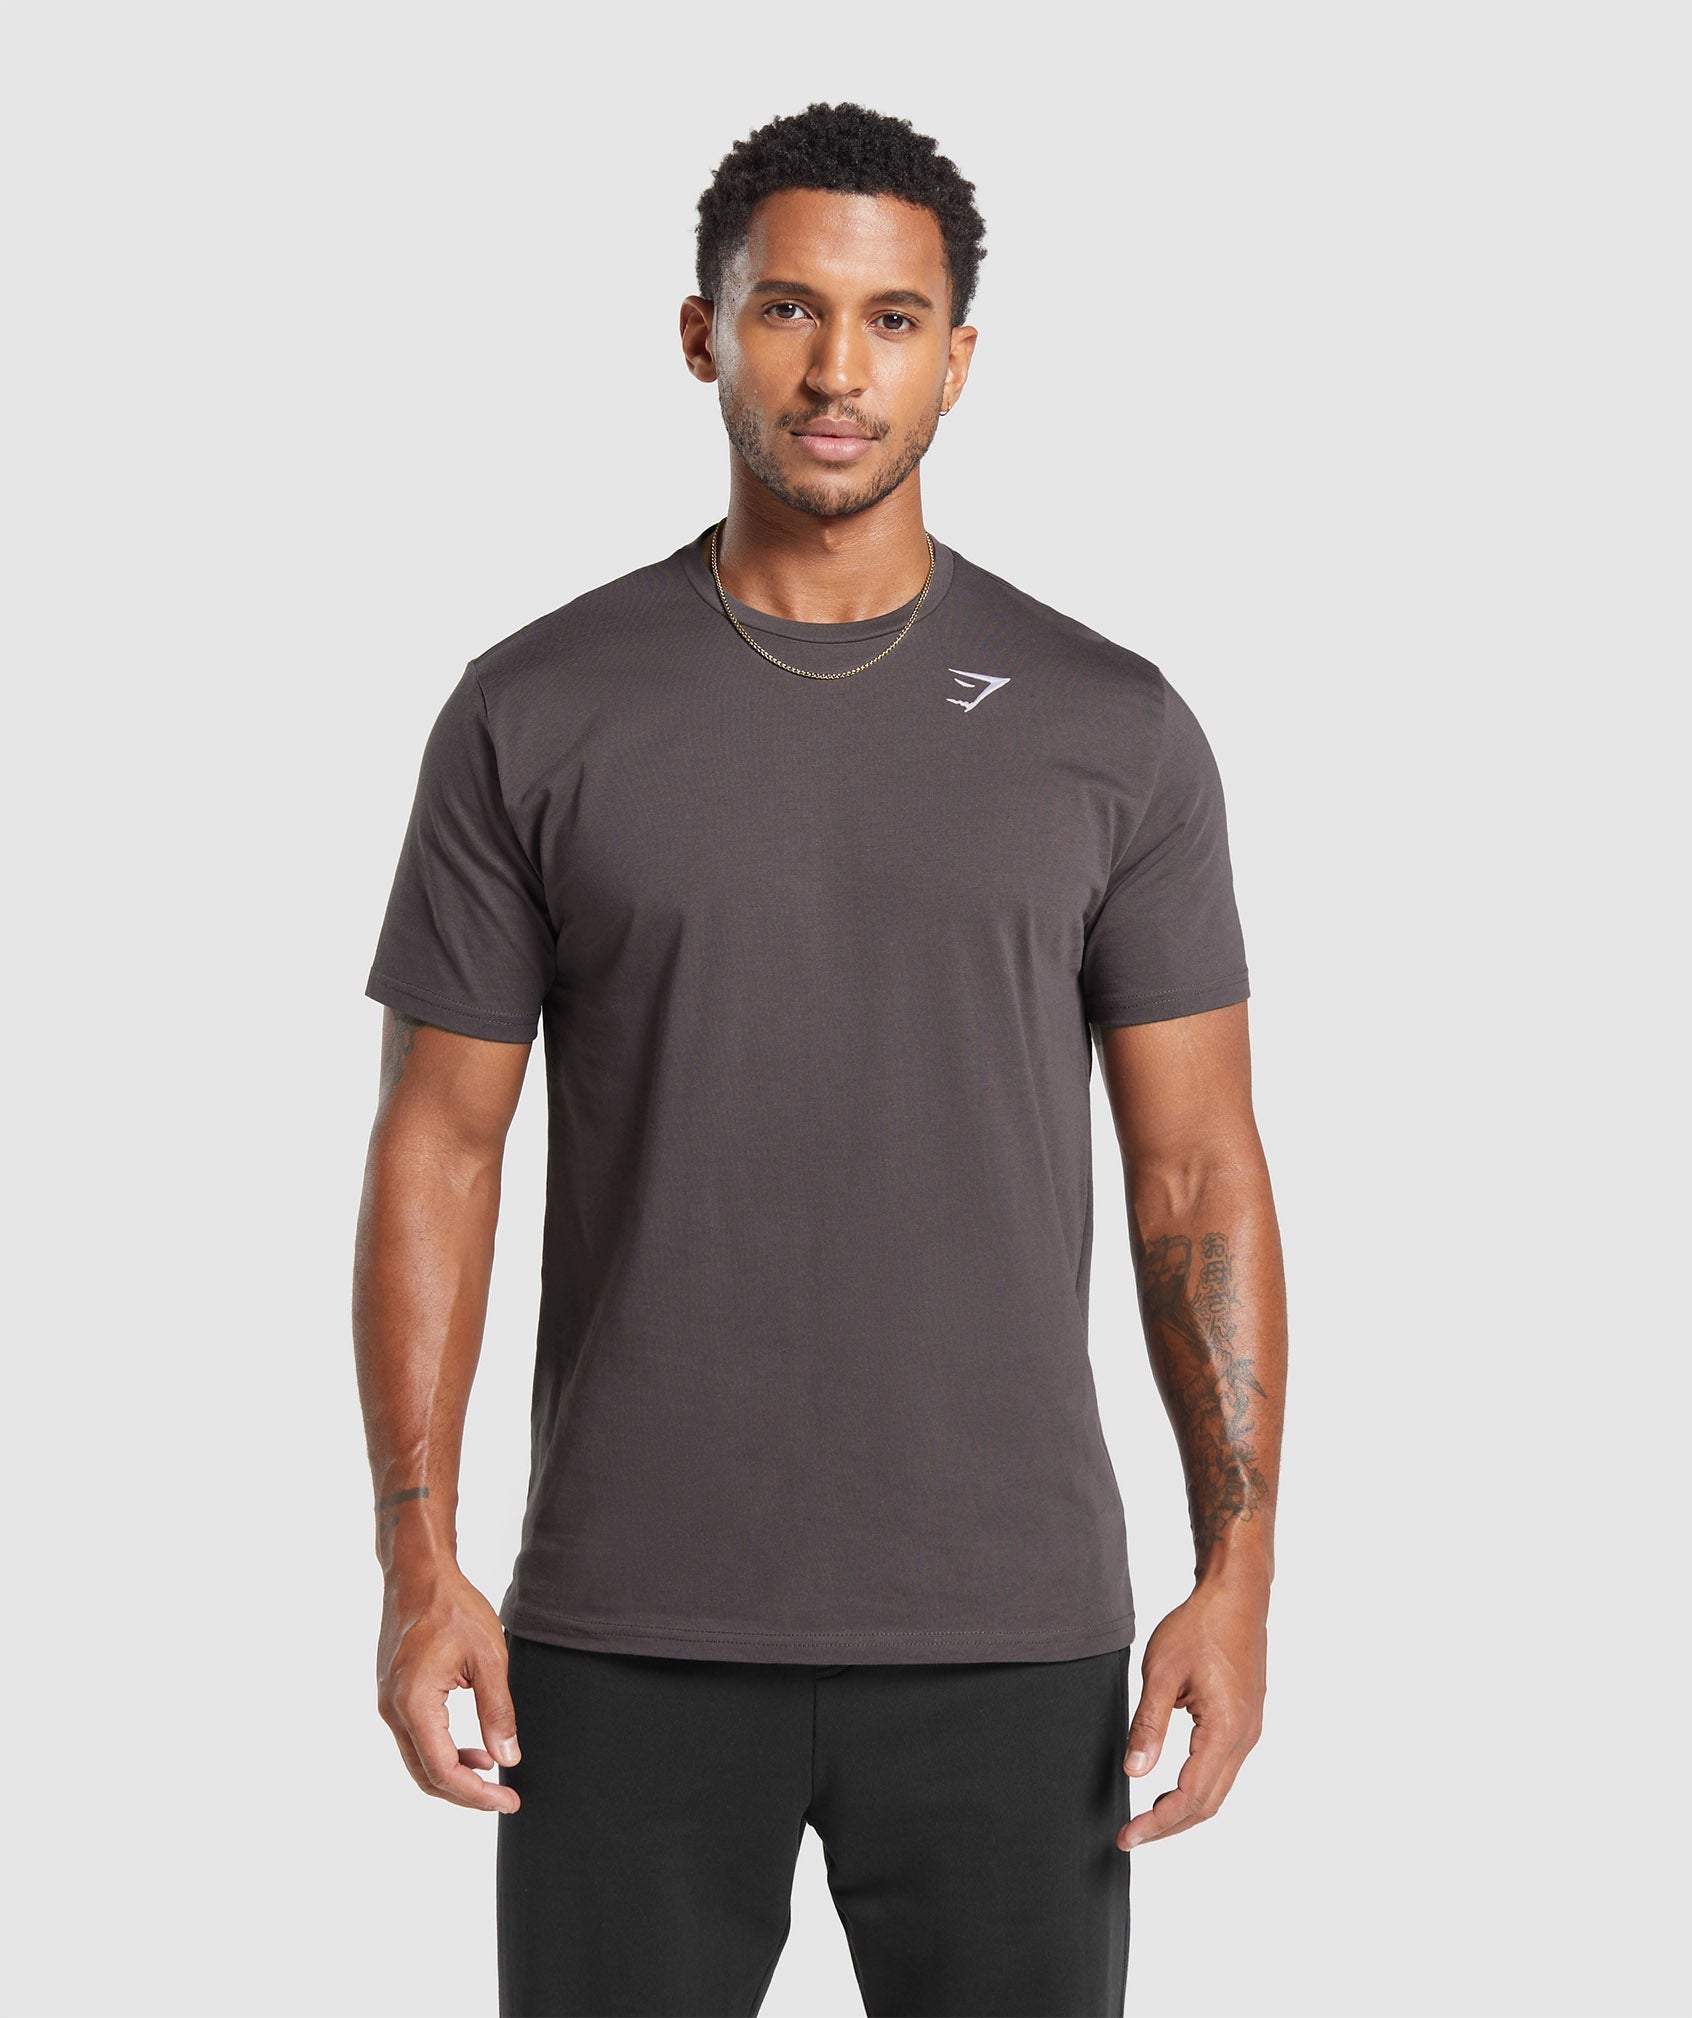 Gymshark Crest T-Shirt - Greyed Purple | Gymshark